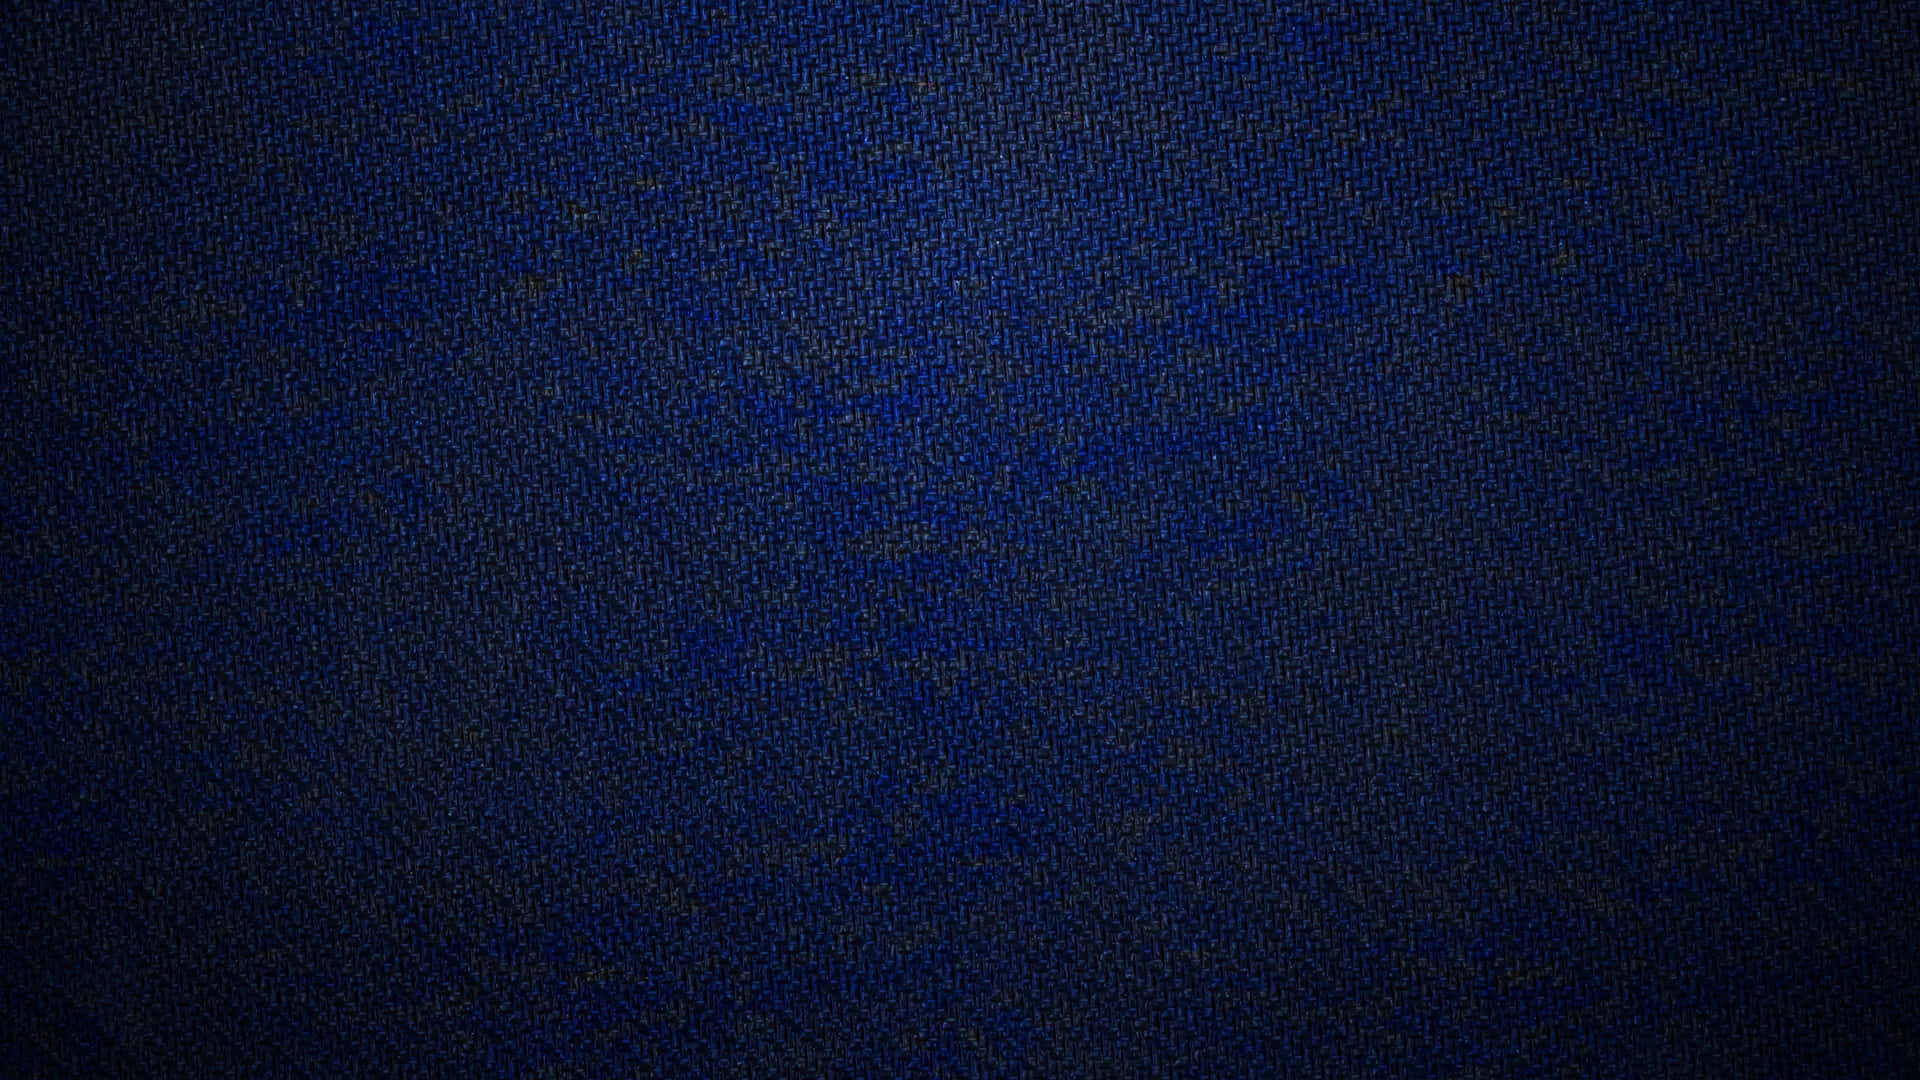 Navy Blue Denim Fabric Texture Picture